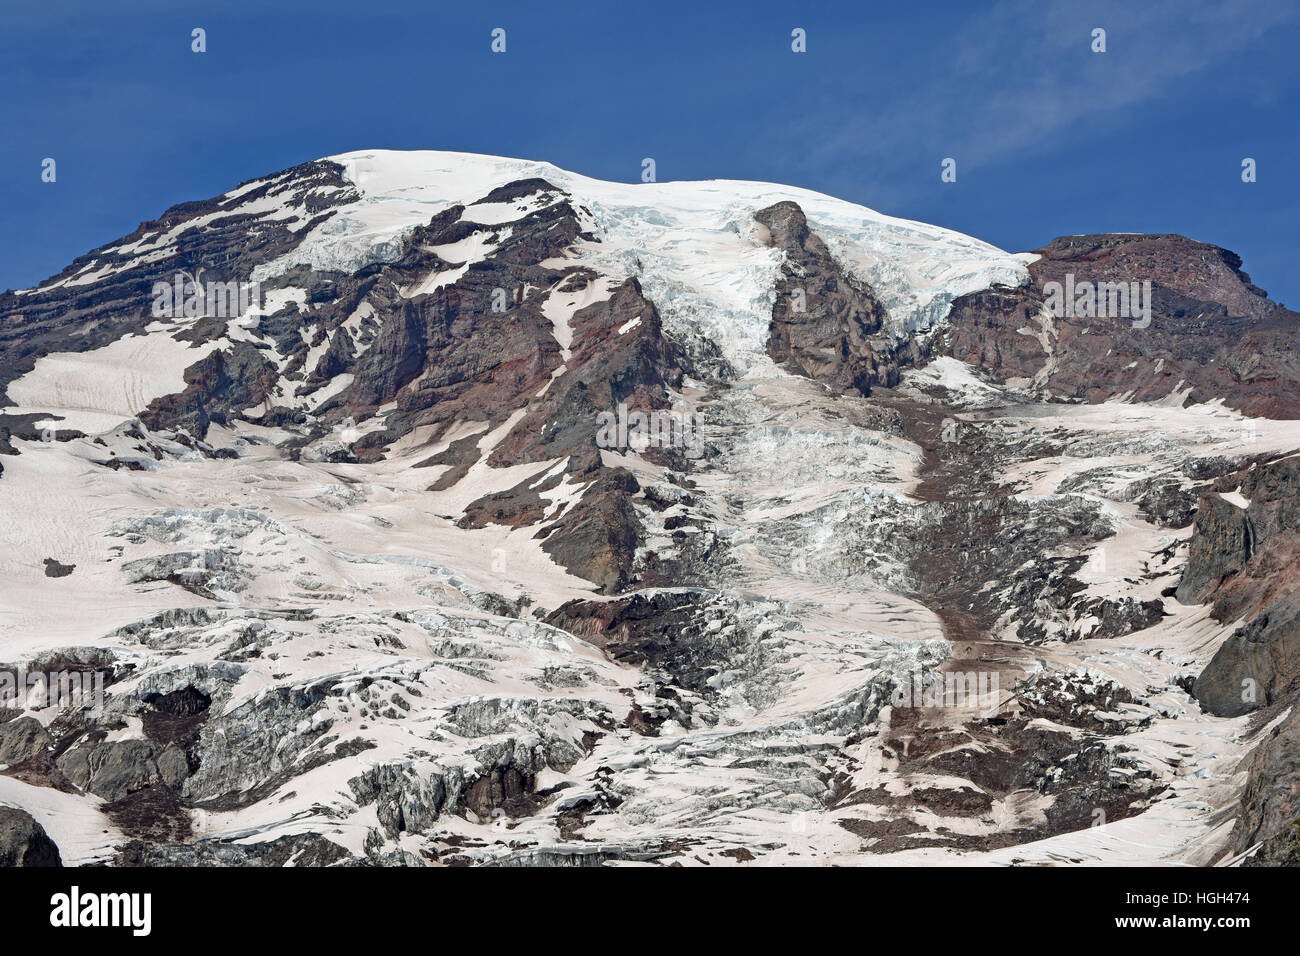 Snow-capped summit of Mount Rainier, Mount Rainier National Park, Cascade Range, Washington, Pacific Northwest, USA Stock Photo